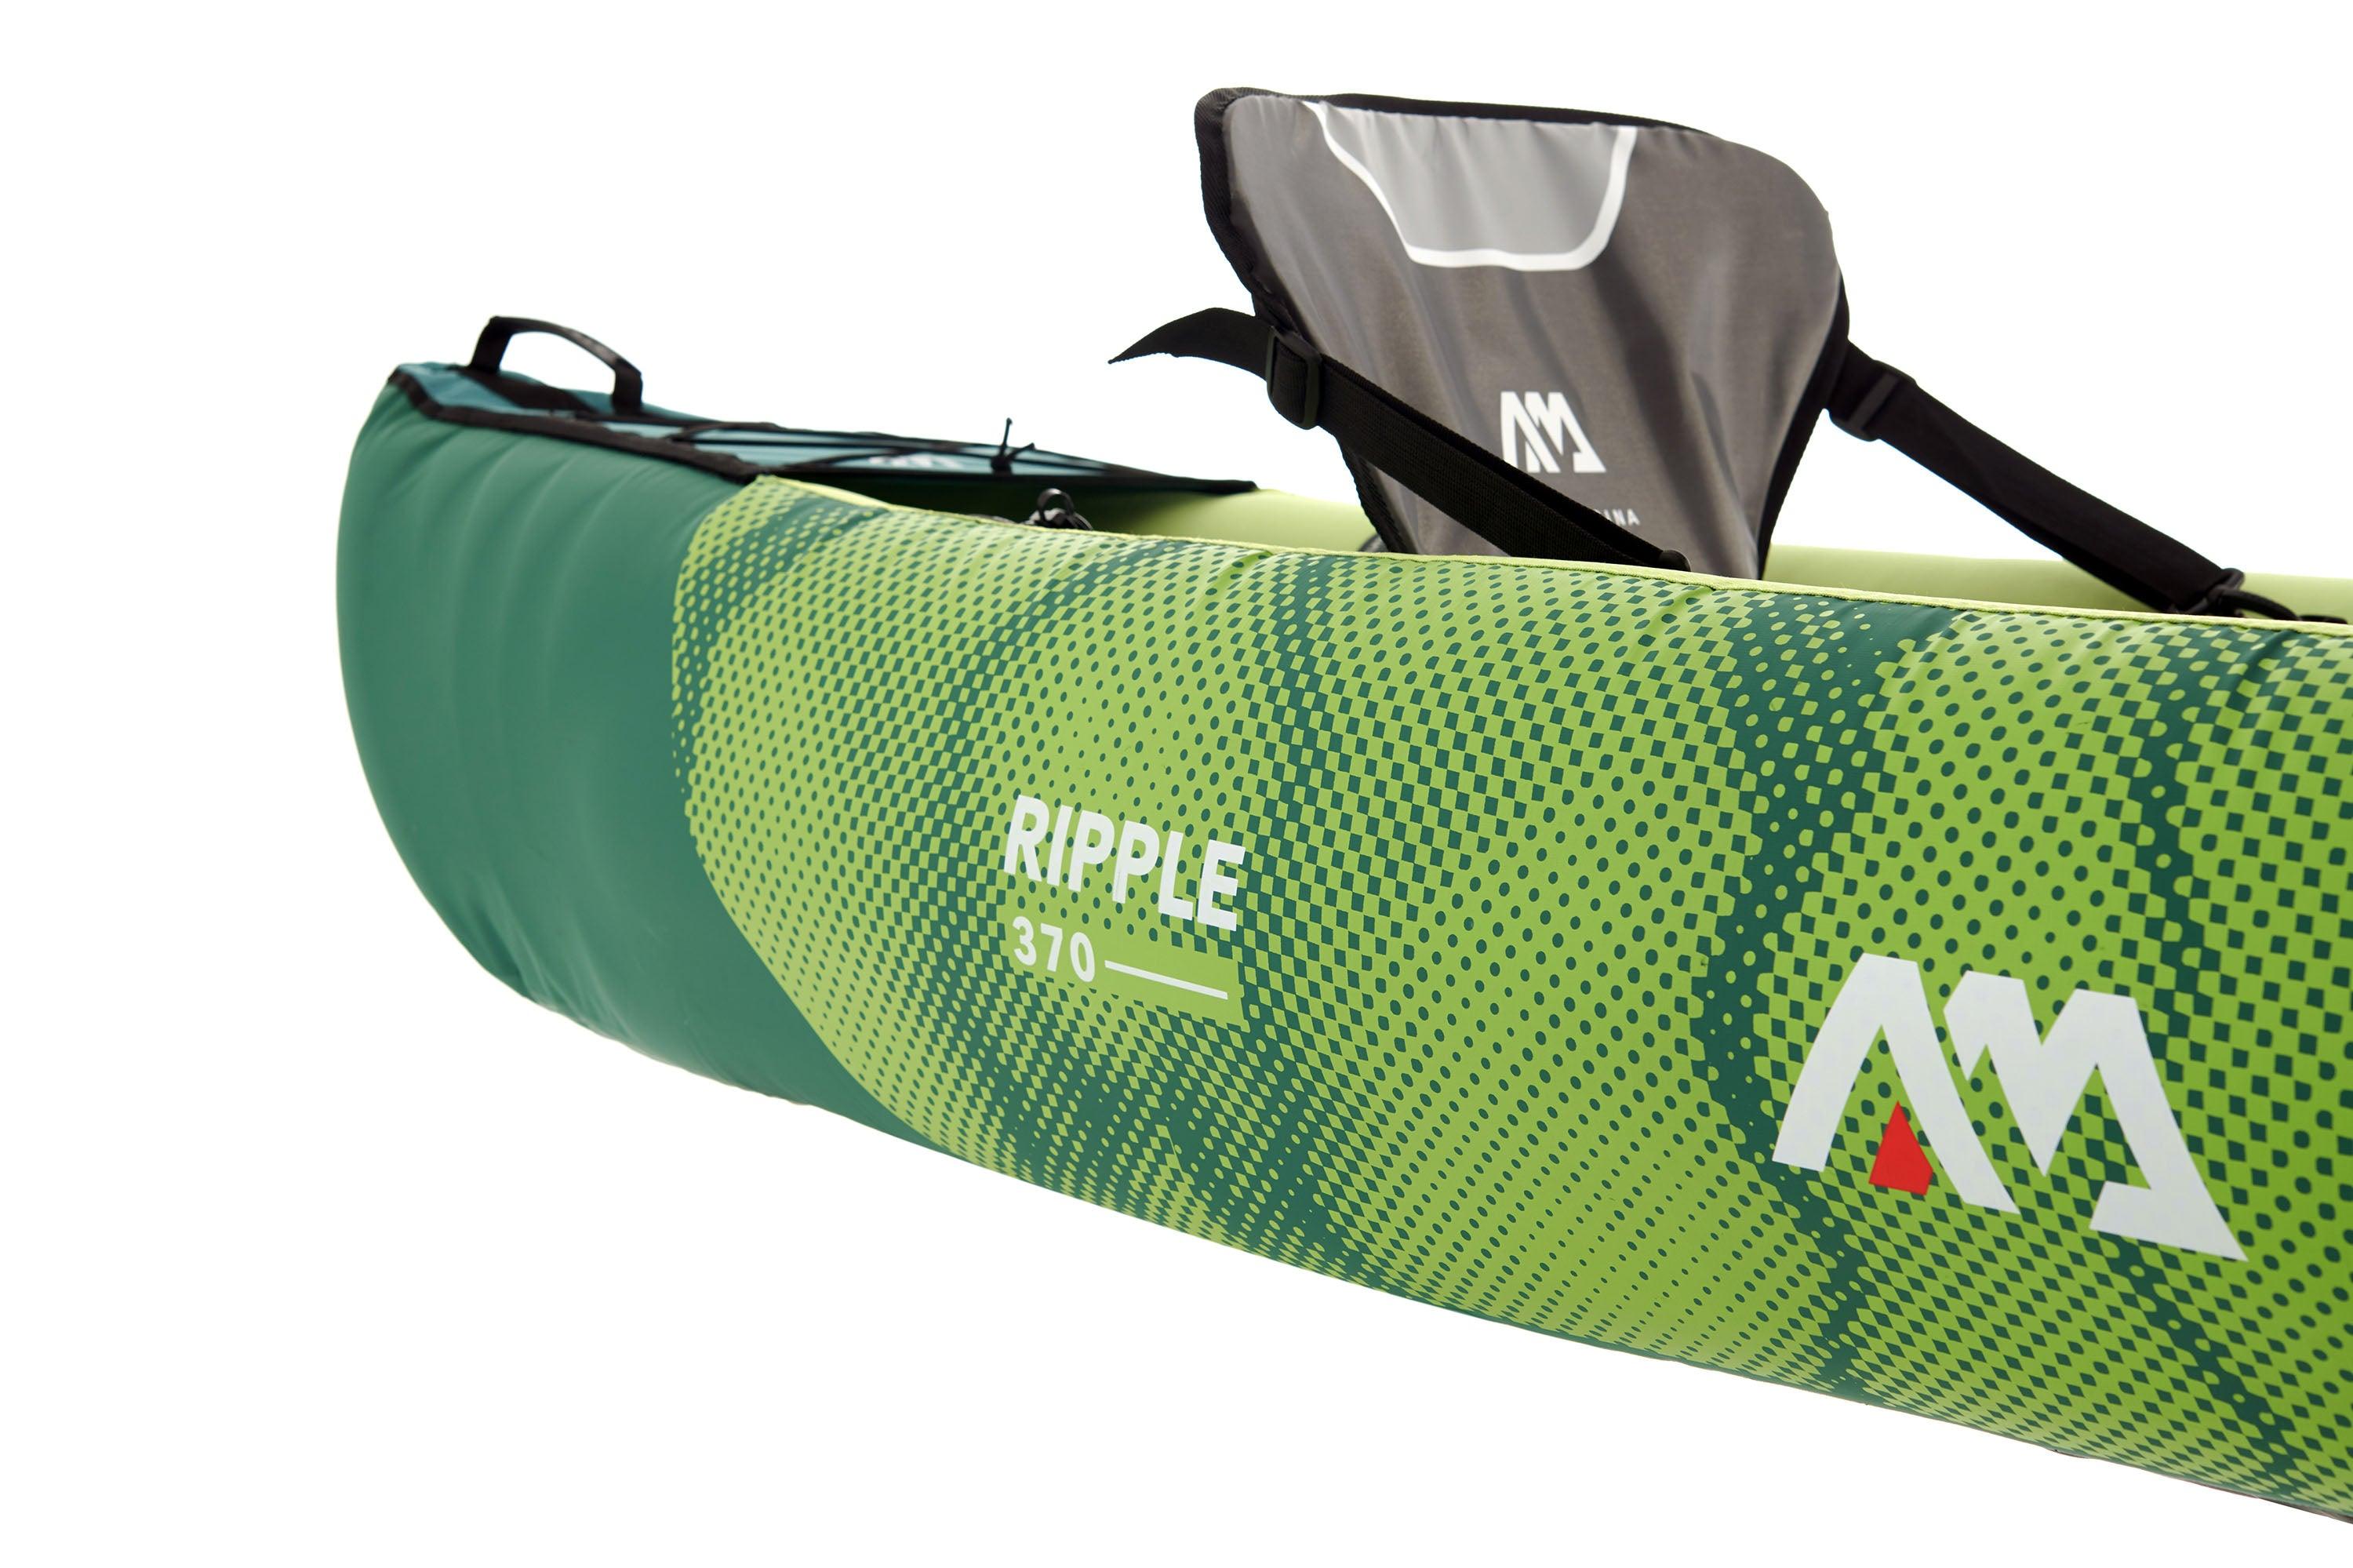 RIPPLE 370 Recreational Canoe 3-person - DTI Direct Canada